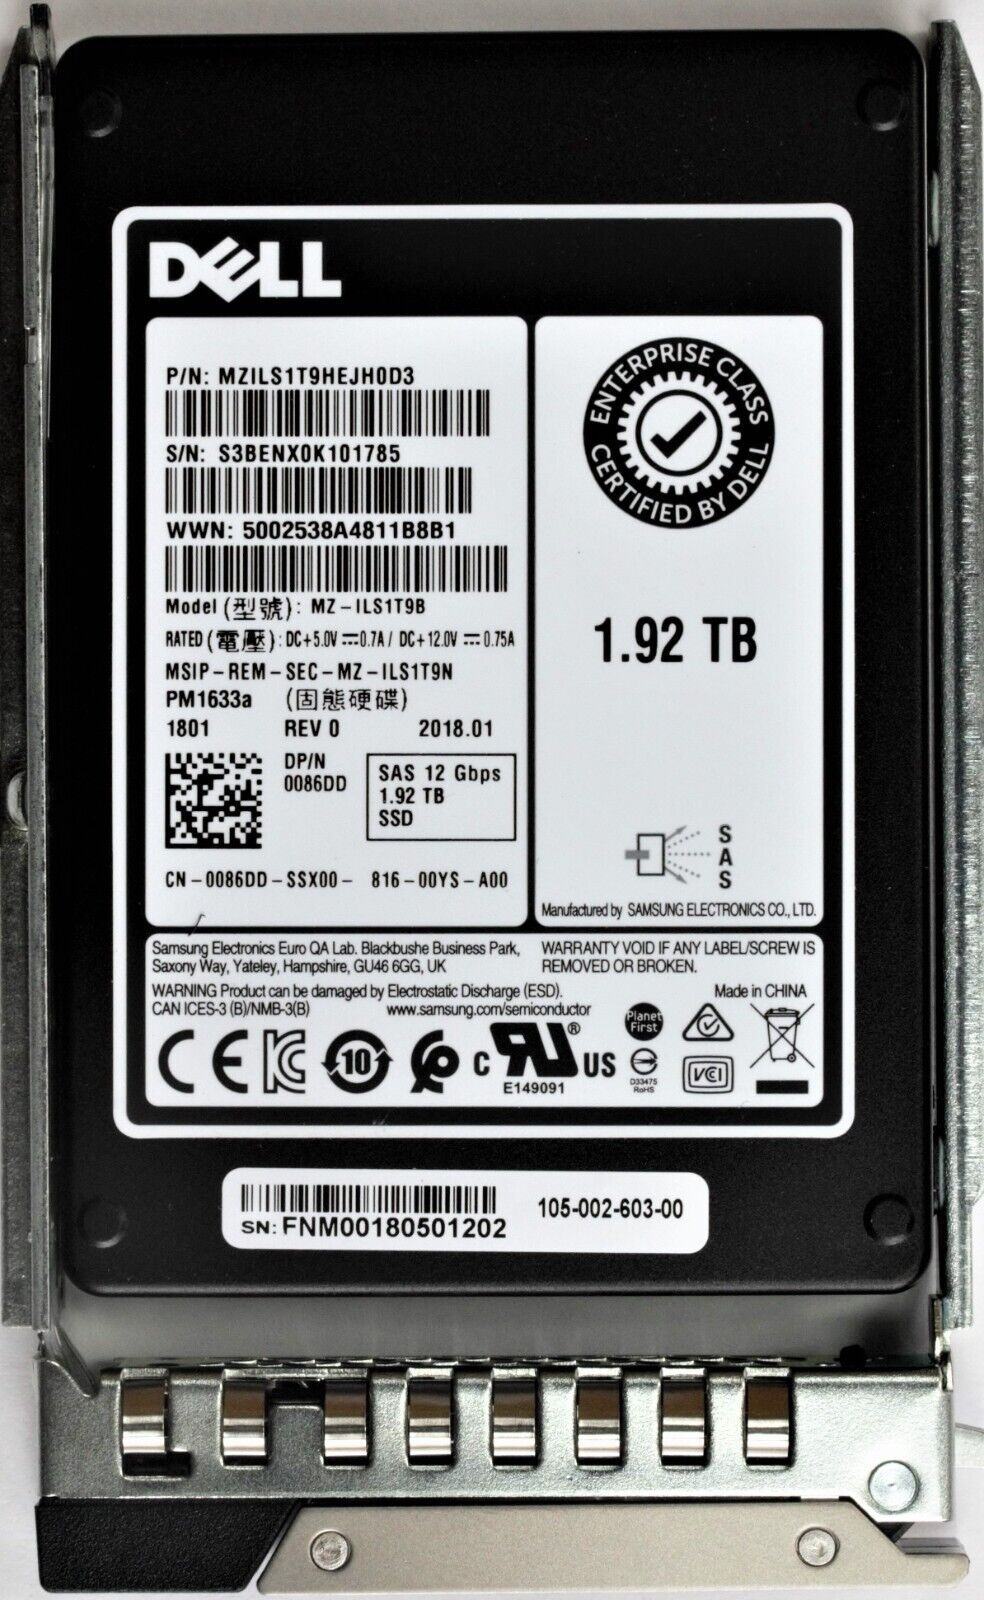 Lot of 25 Dell 14G 1.92TB 2.5-inch SAS 12Gbps RI SSD Samsung PM1633a 086DD